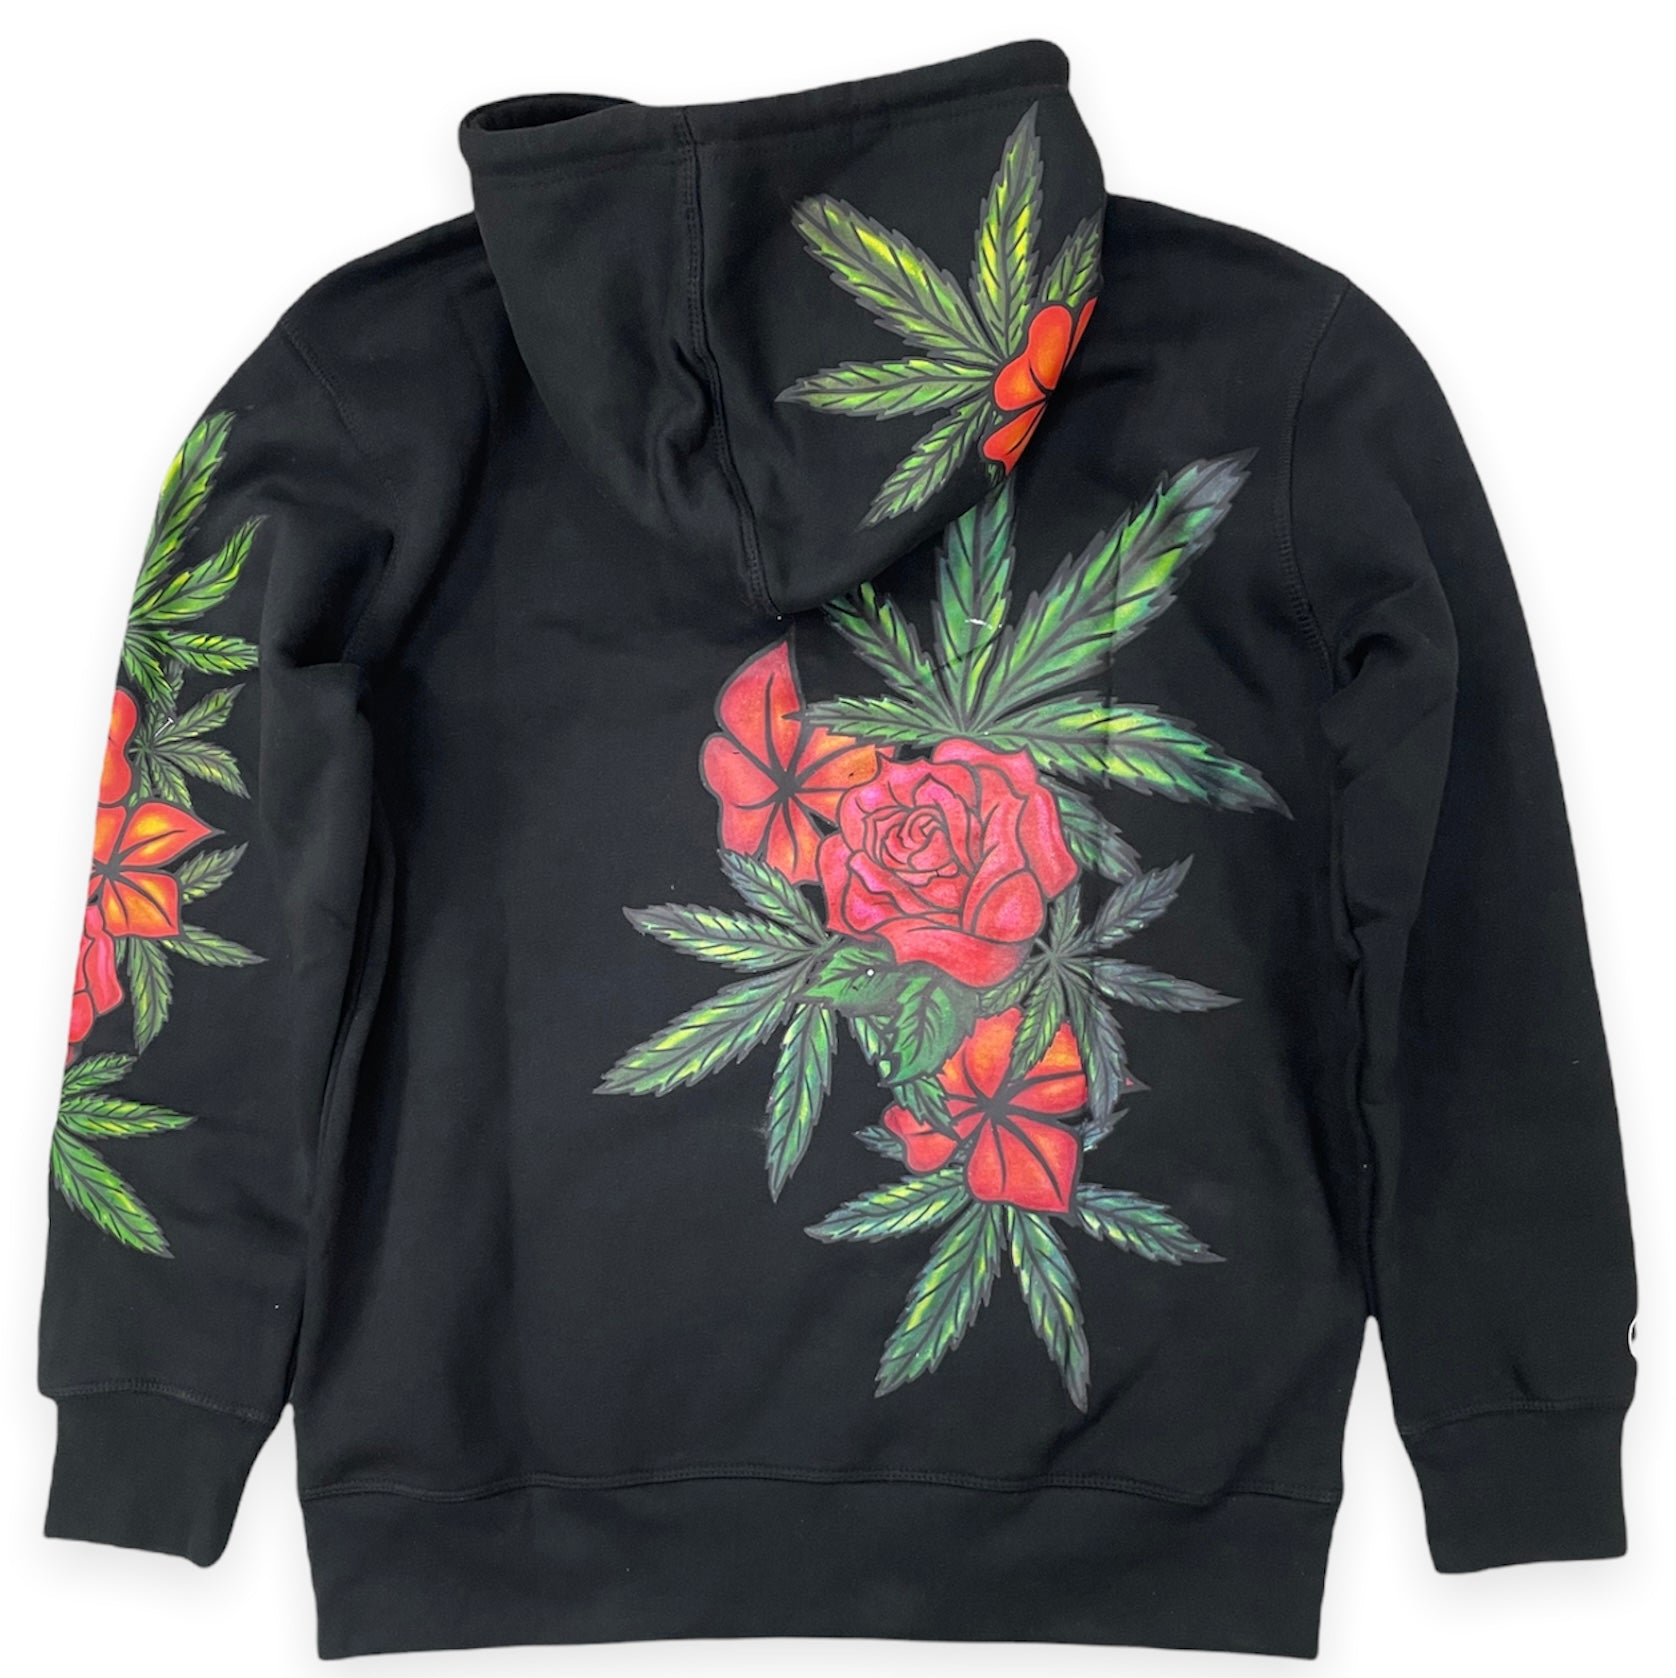 Runtz Worldwide Floral Sweatsuit